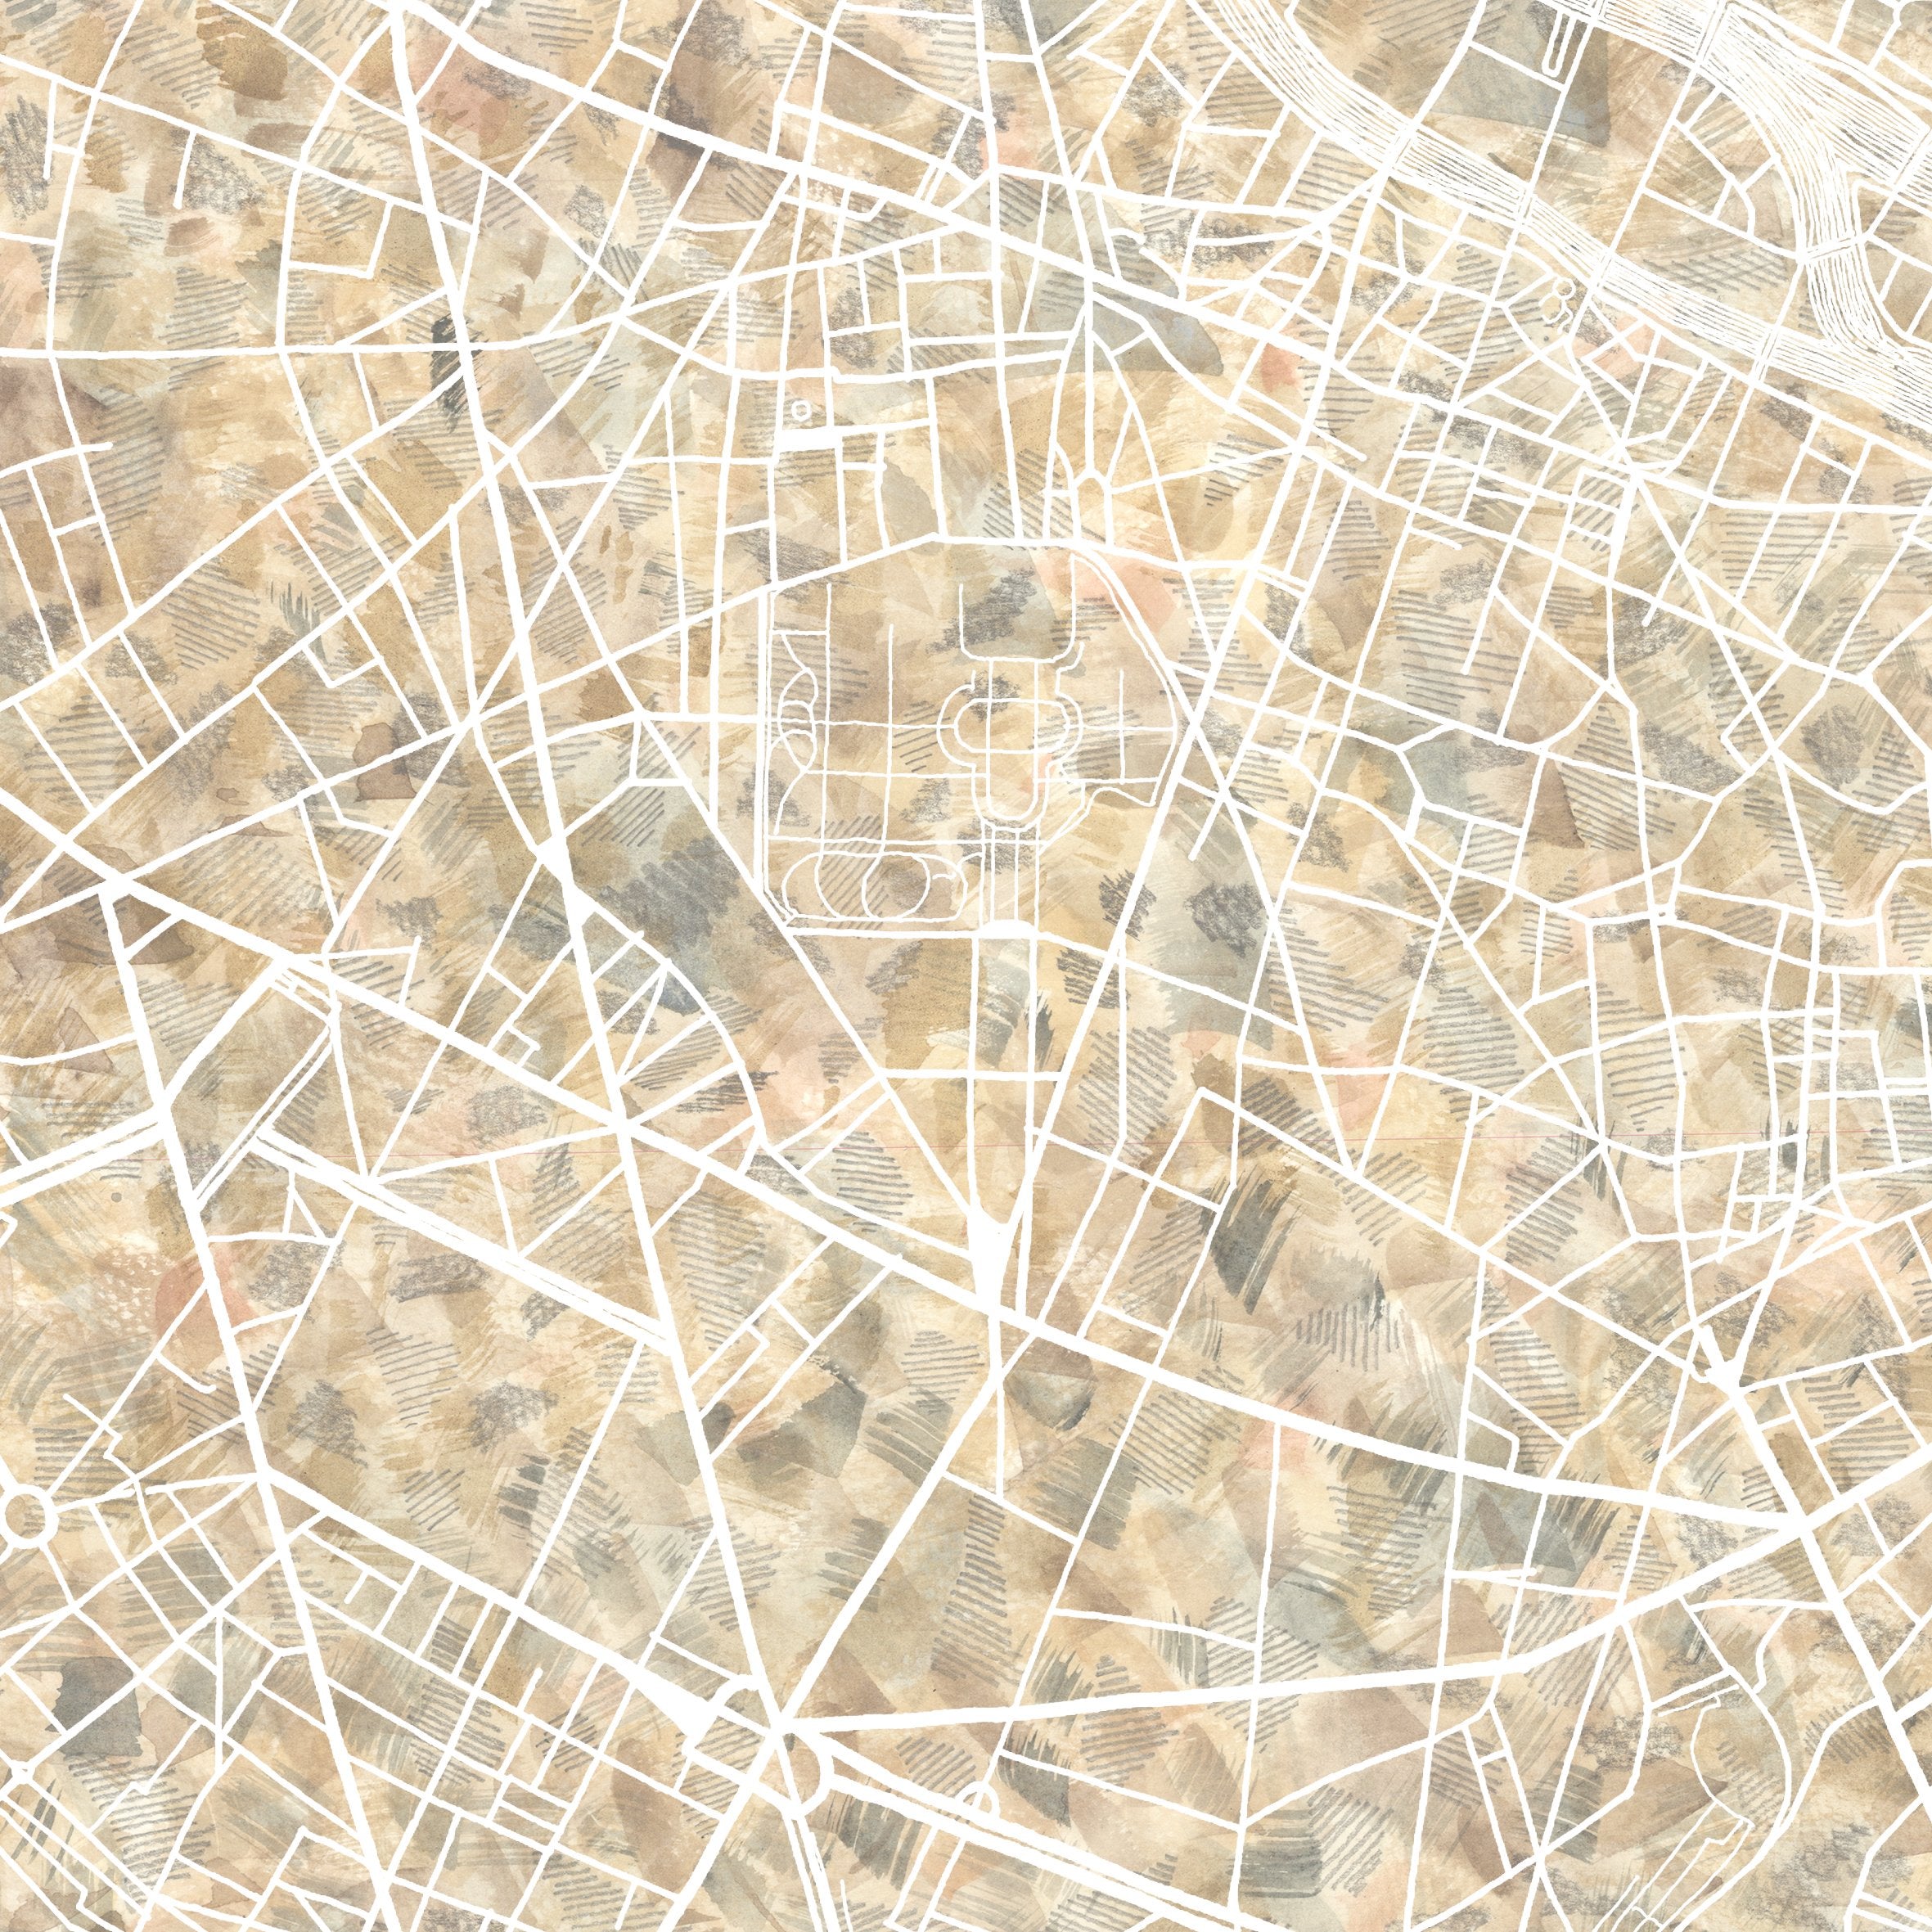 PARIS Urban Fabrics City Map: PRINT